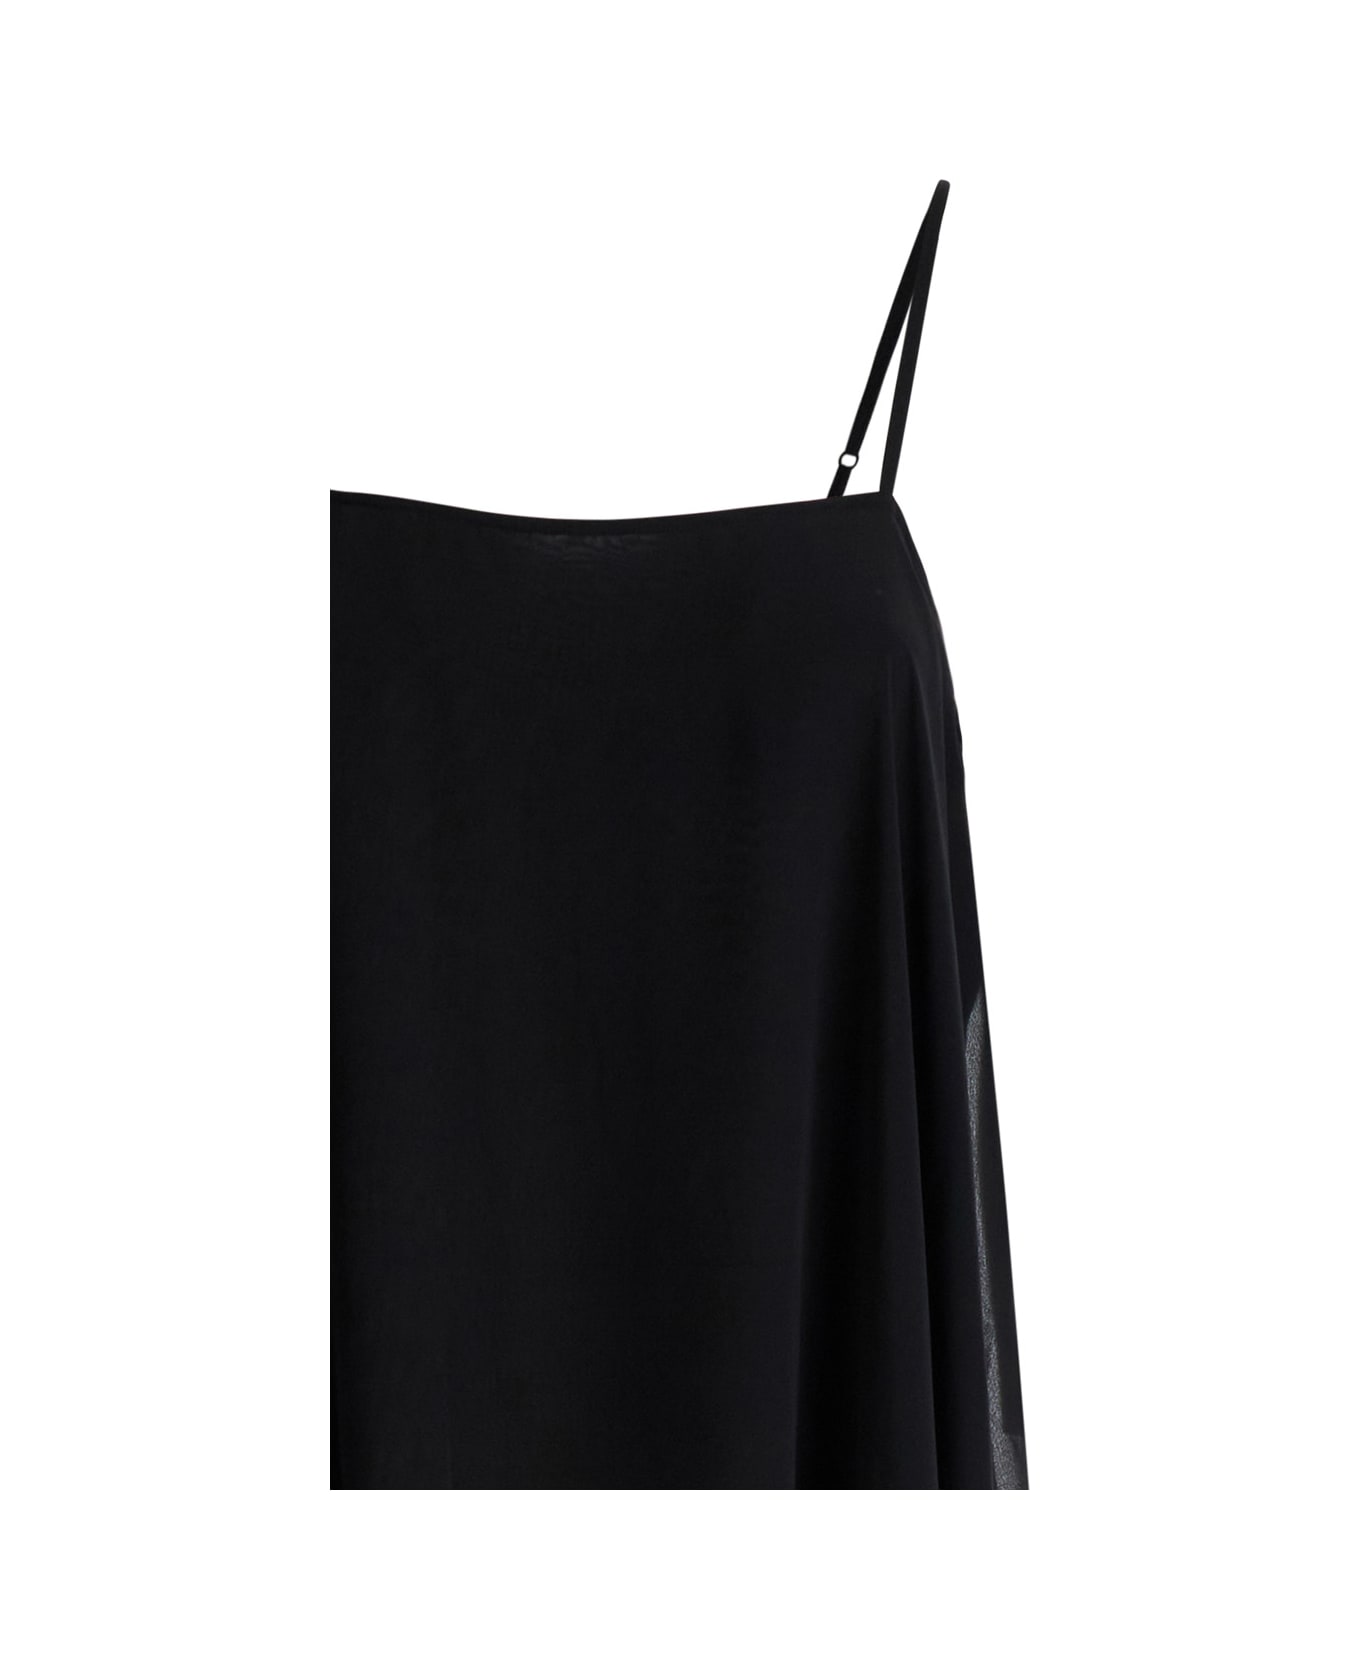 Rotate by Birger Christensen Black Wide Maxi Dress In Chiffon Woman - Black